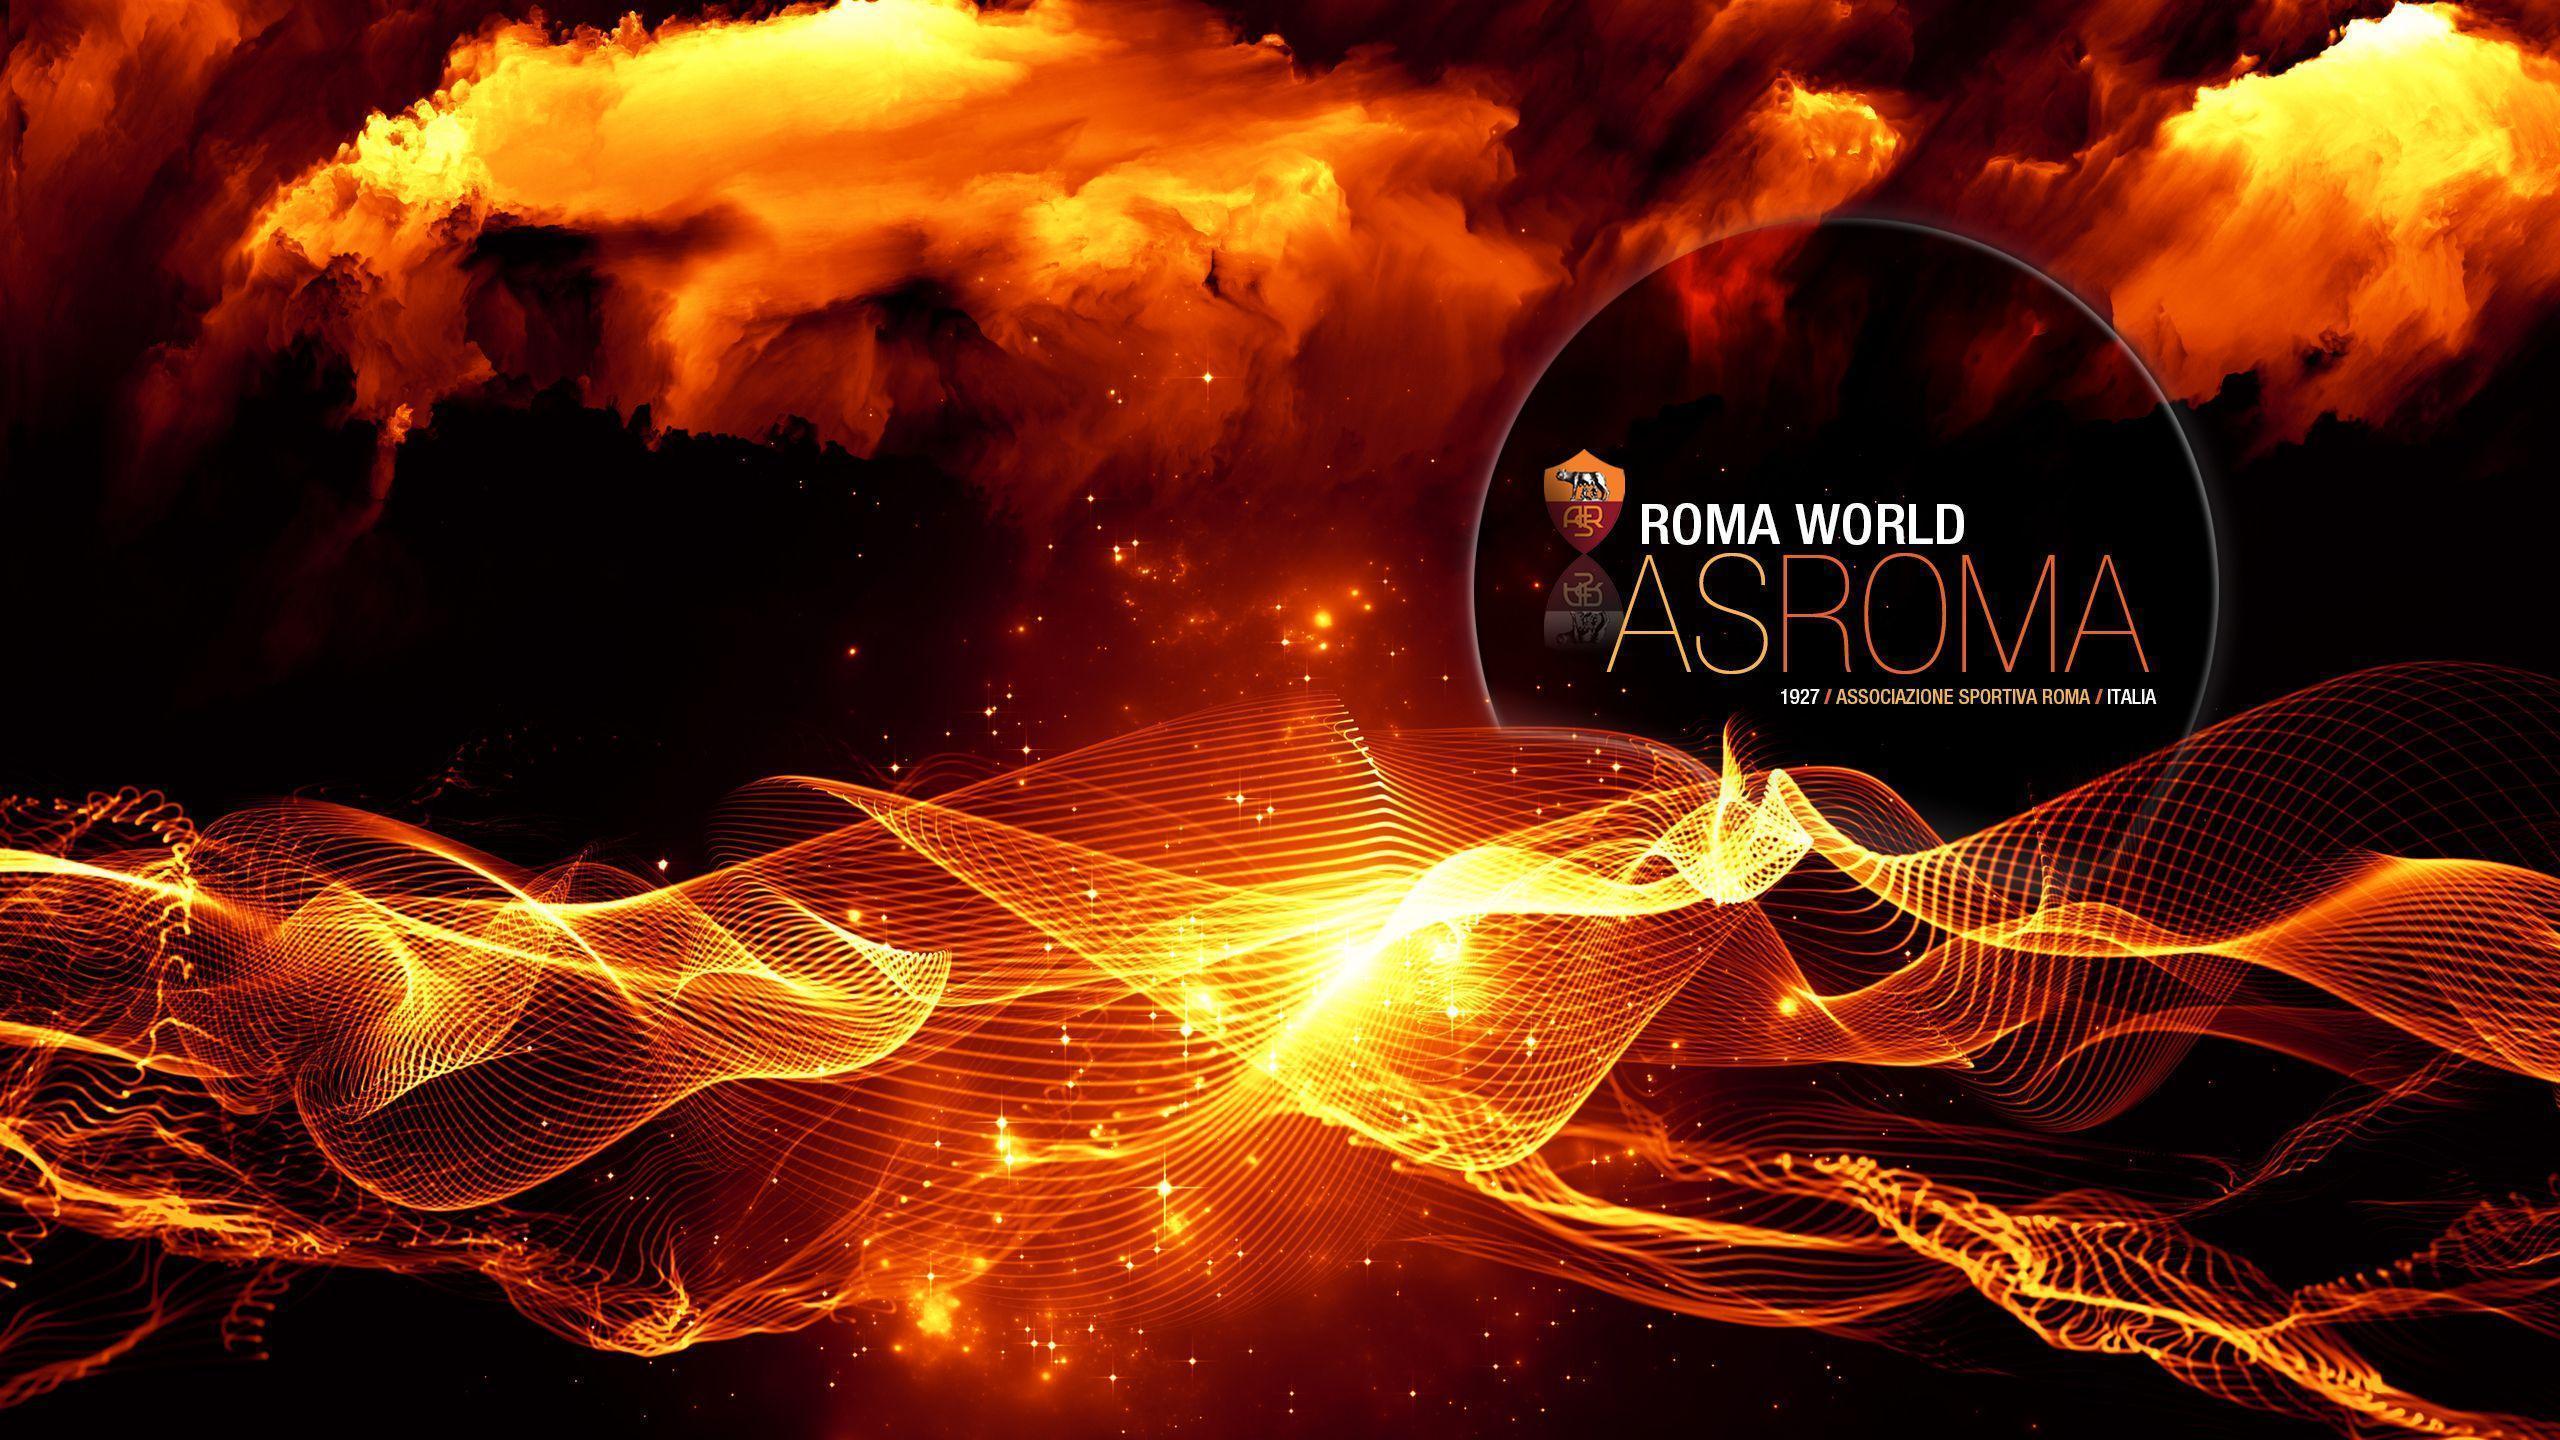 Roma World&; Wallpaper